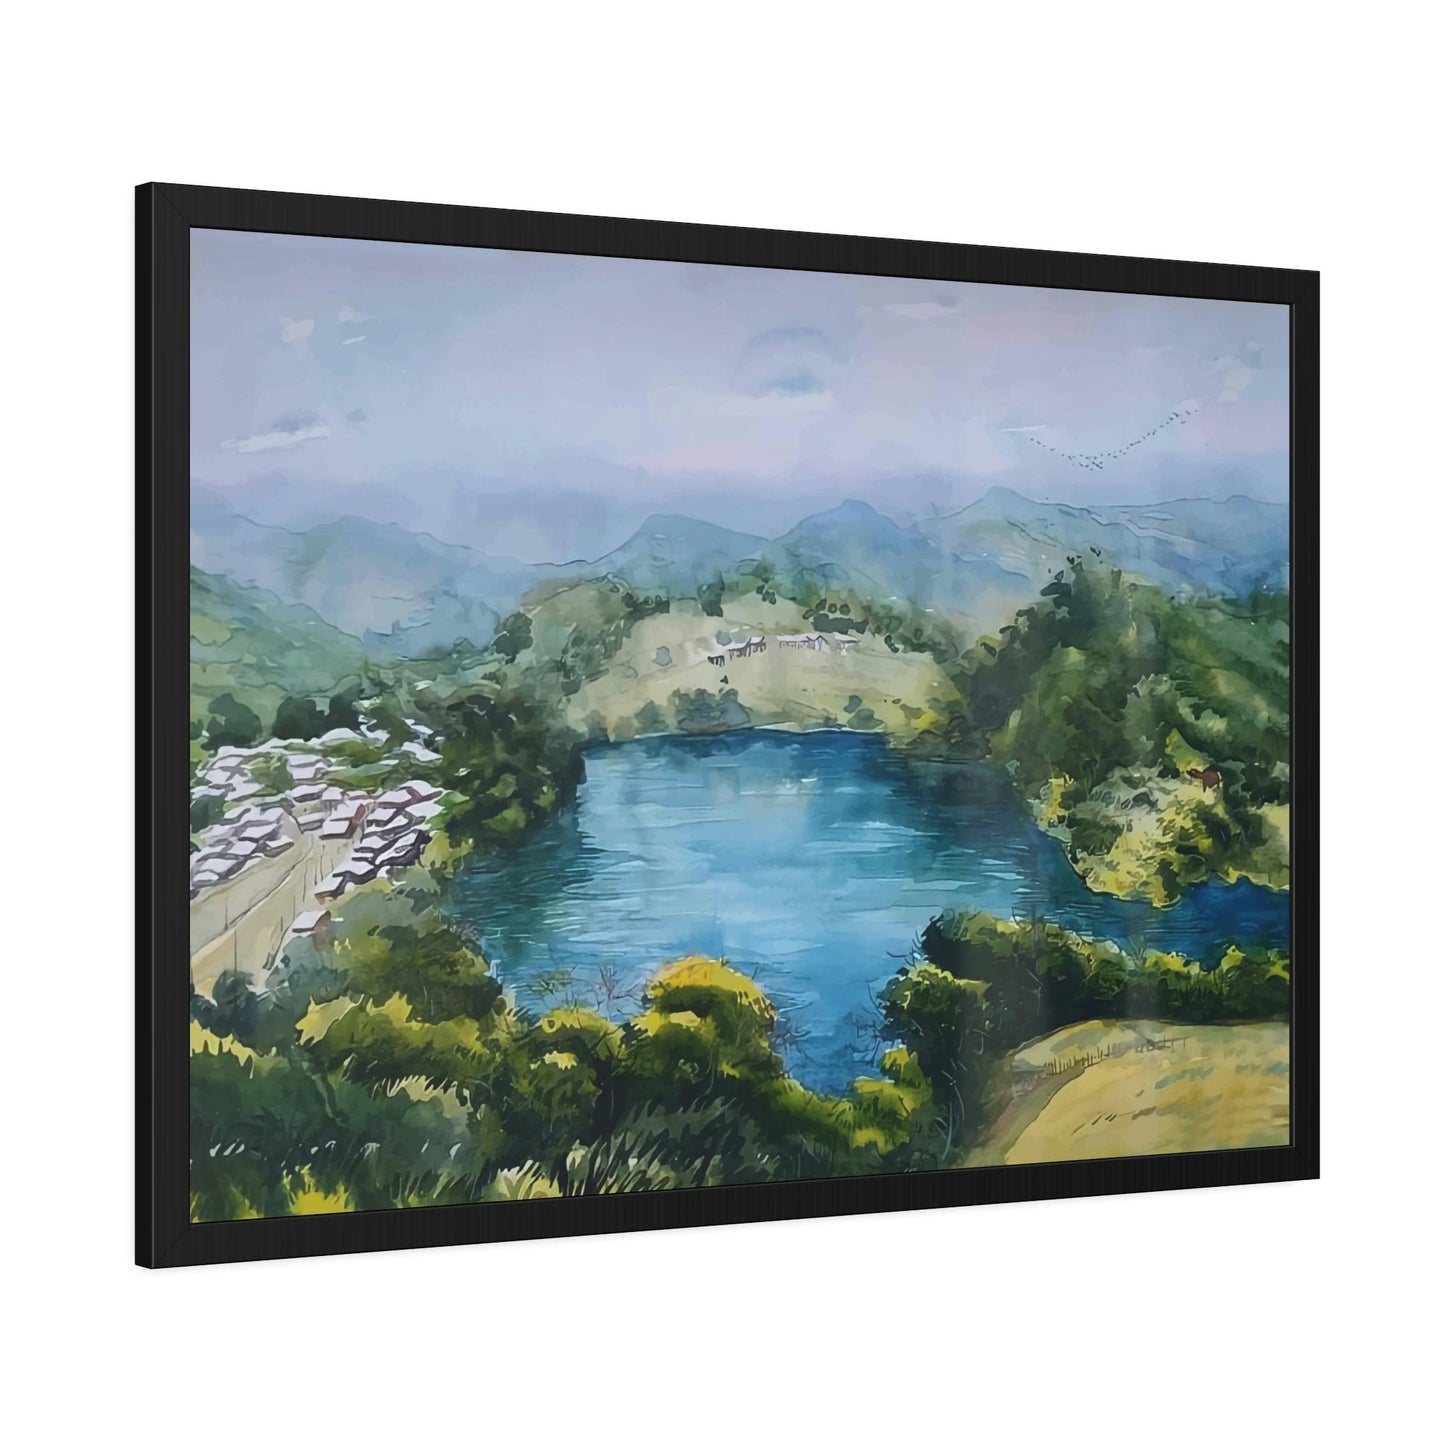 Lakeside Serenity: Natural Canvas Wall Art of a Peaceful Lake View